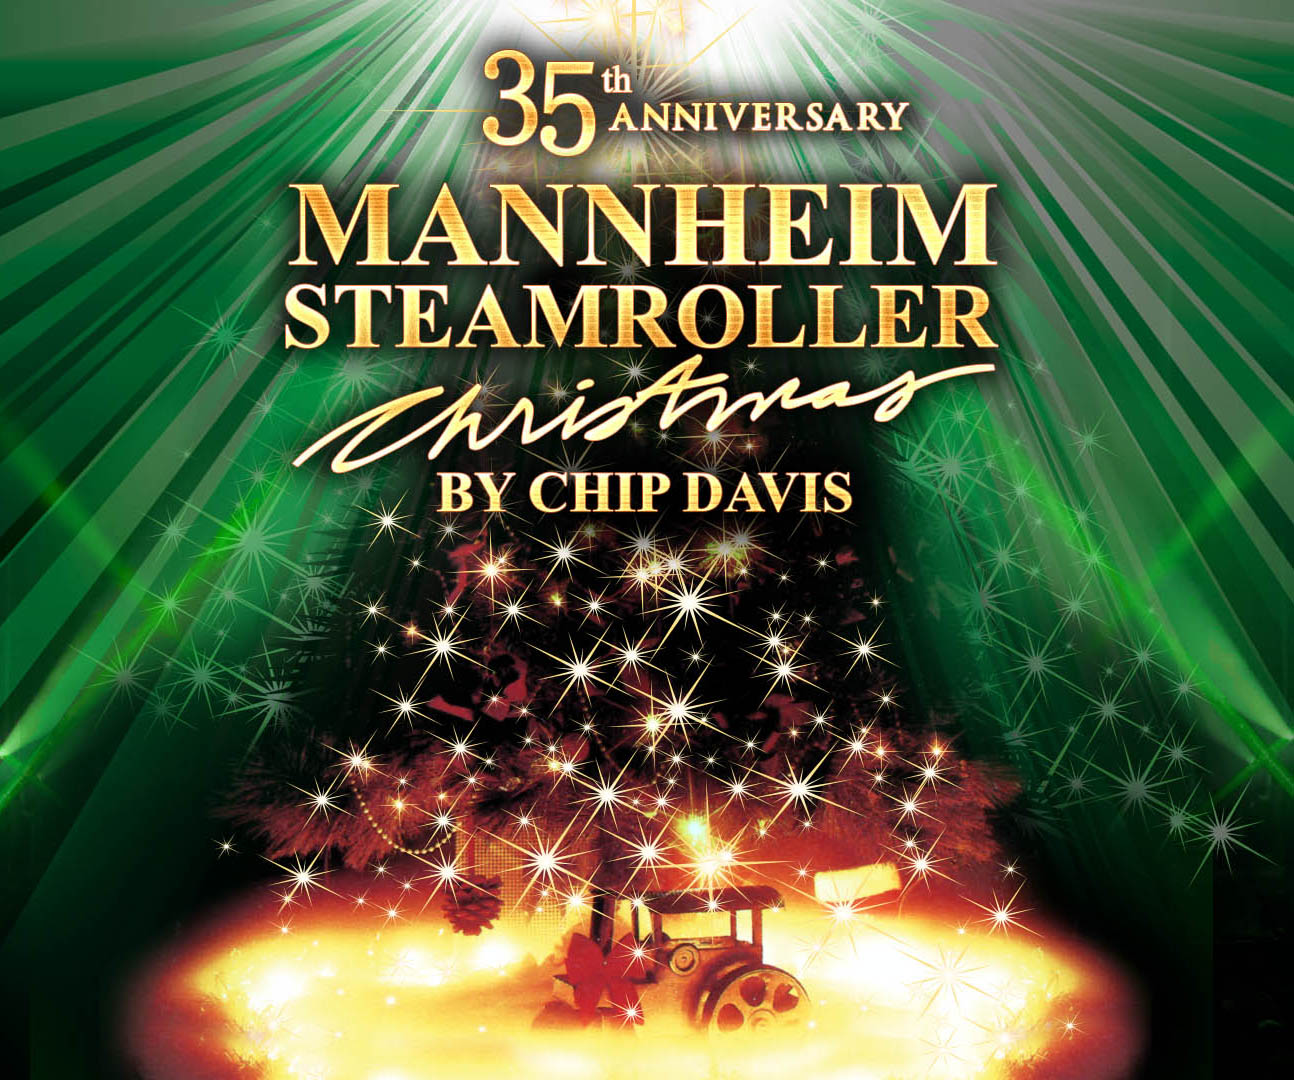 Mannheim steamroller 2020 dates